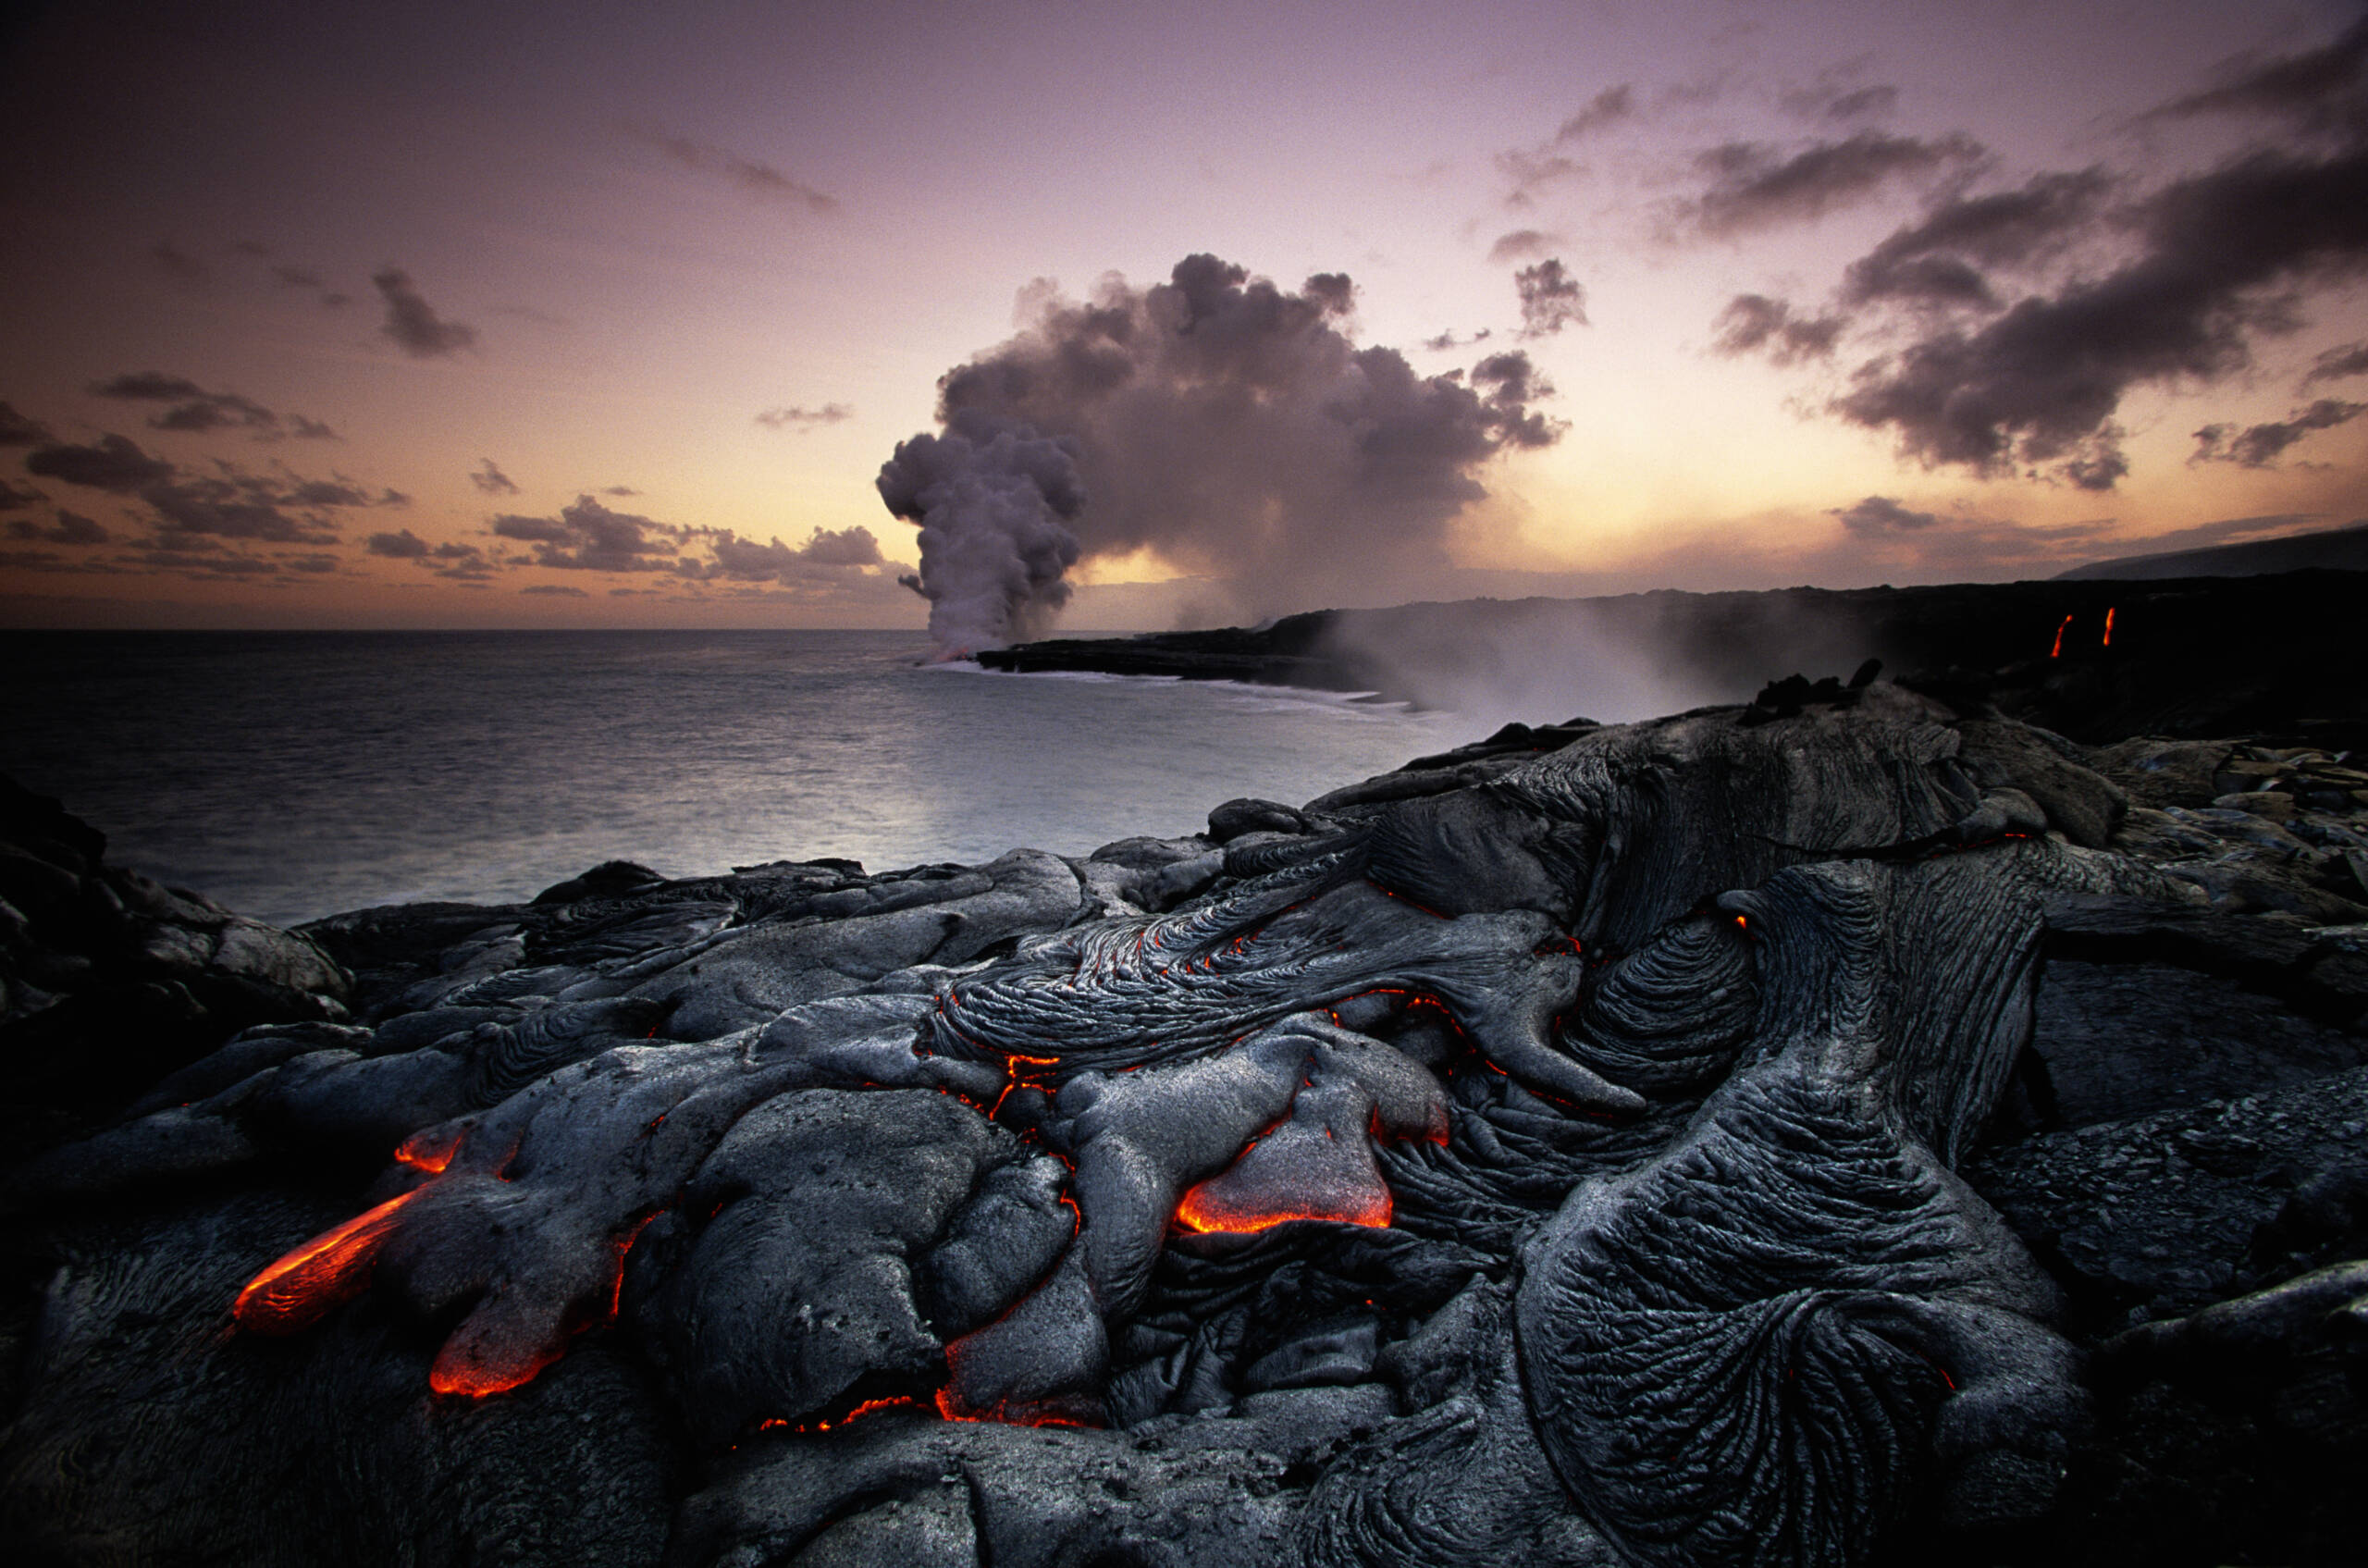 USA, Hawaii, Volcanoes National Park, Kilauea erupting 2016 Lava Guides Island Tours